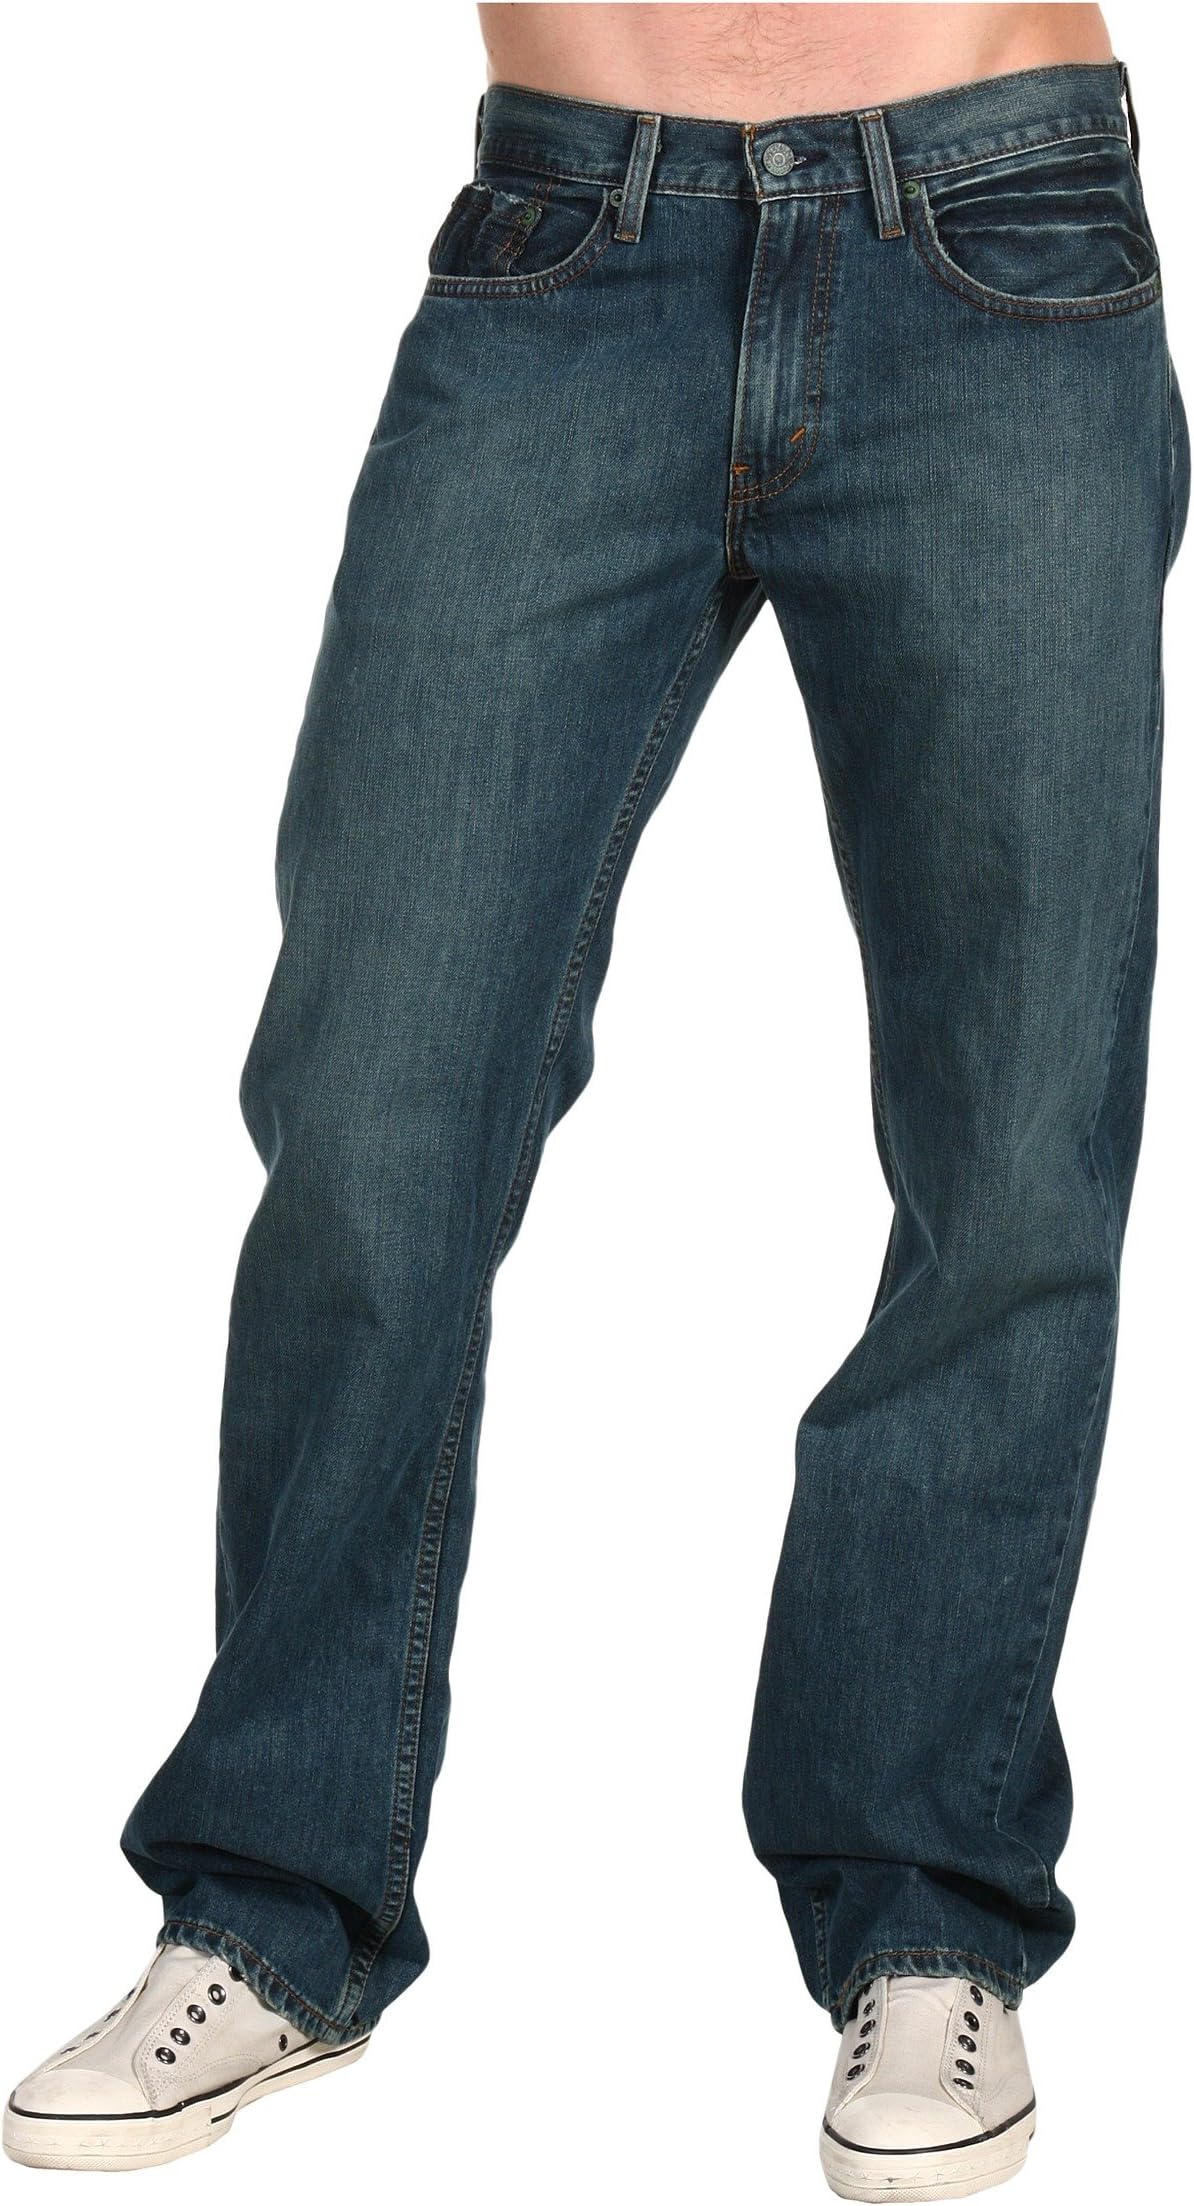 Levis описание модели. Левис 559. Levi's Relaxed джинсы мужские. Модель 559 Levis. Левайс Subzero.